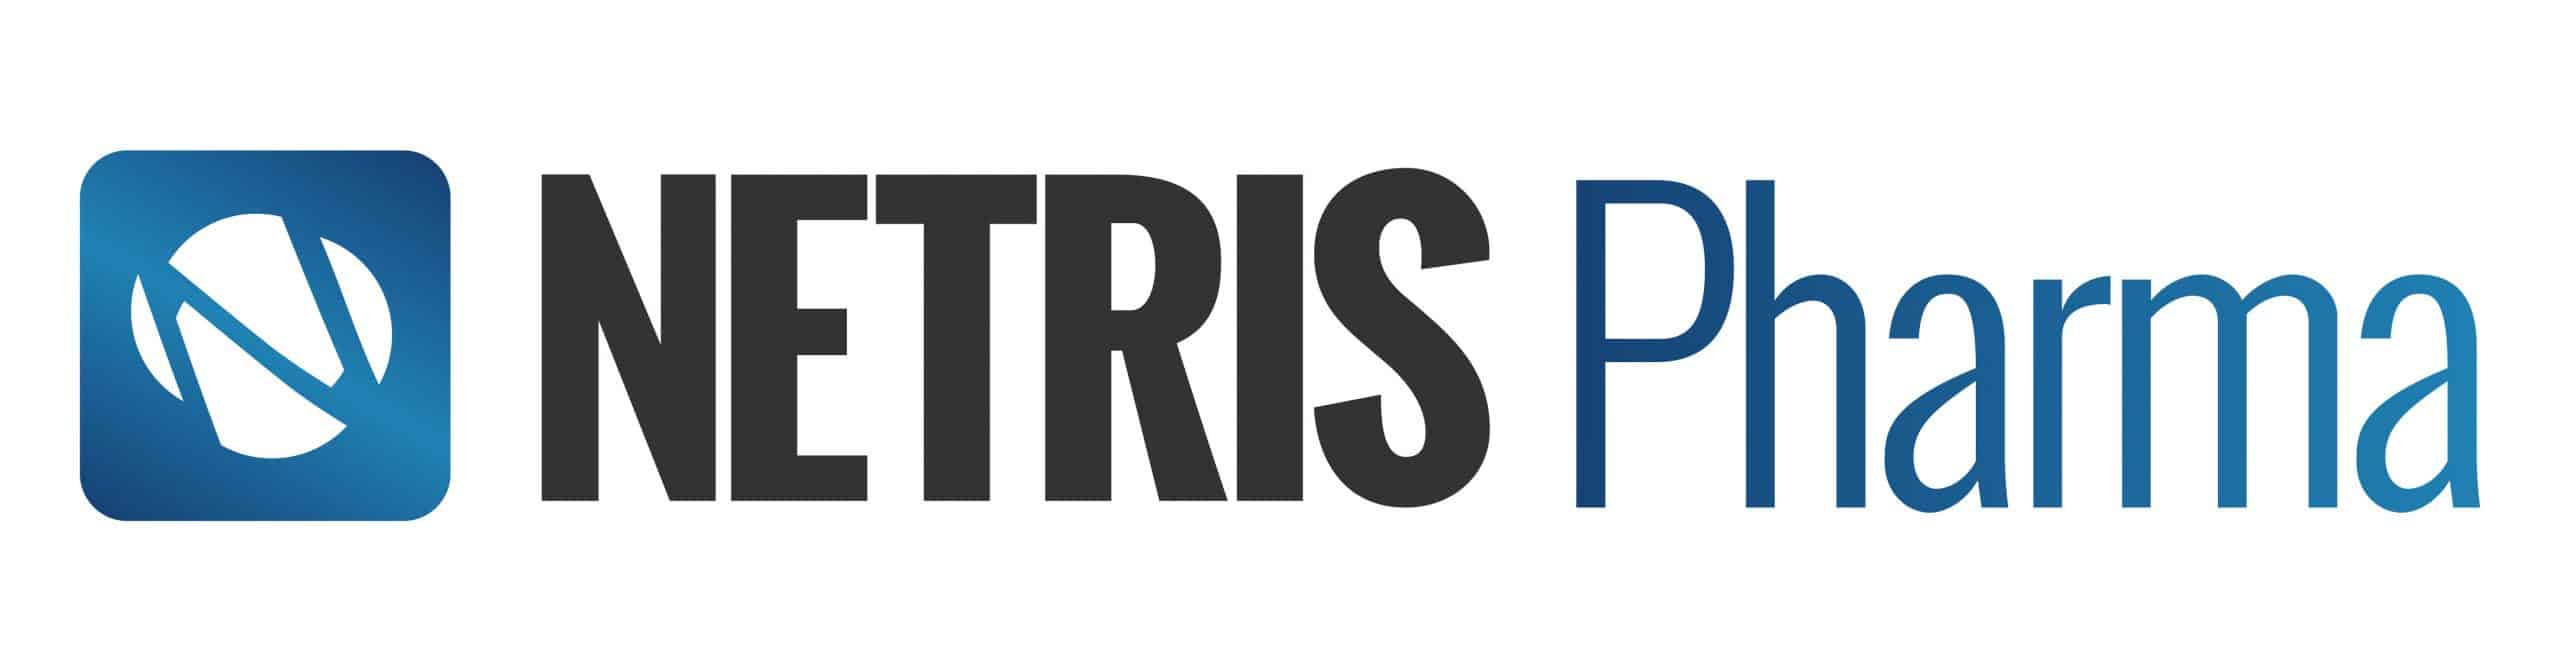 Logo netris pharma